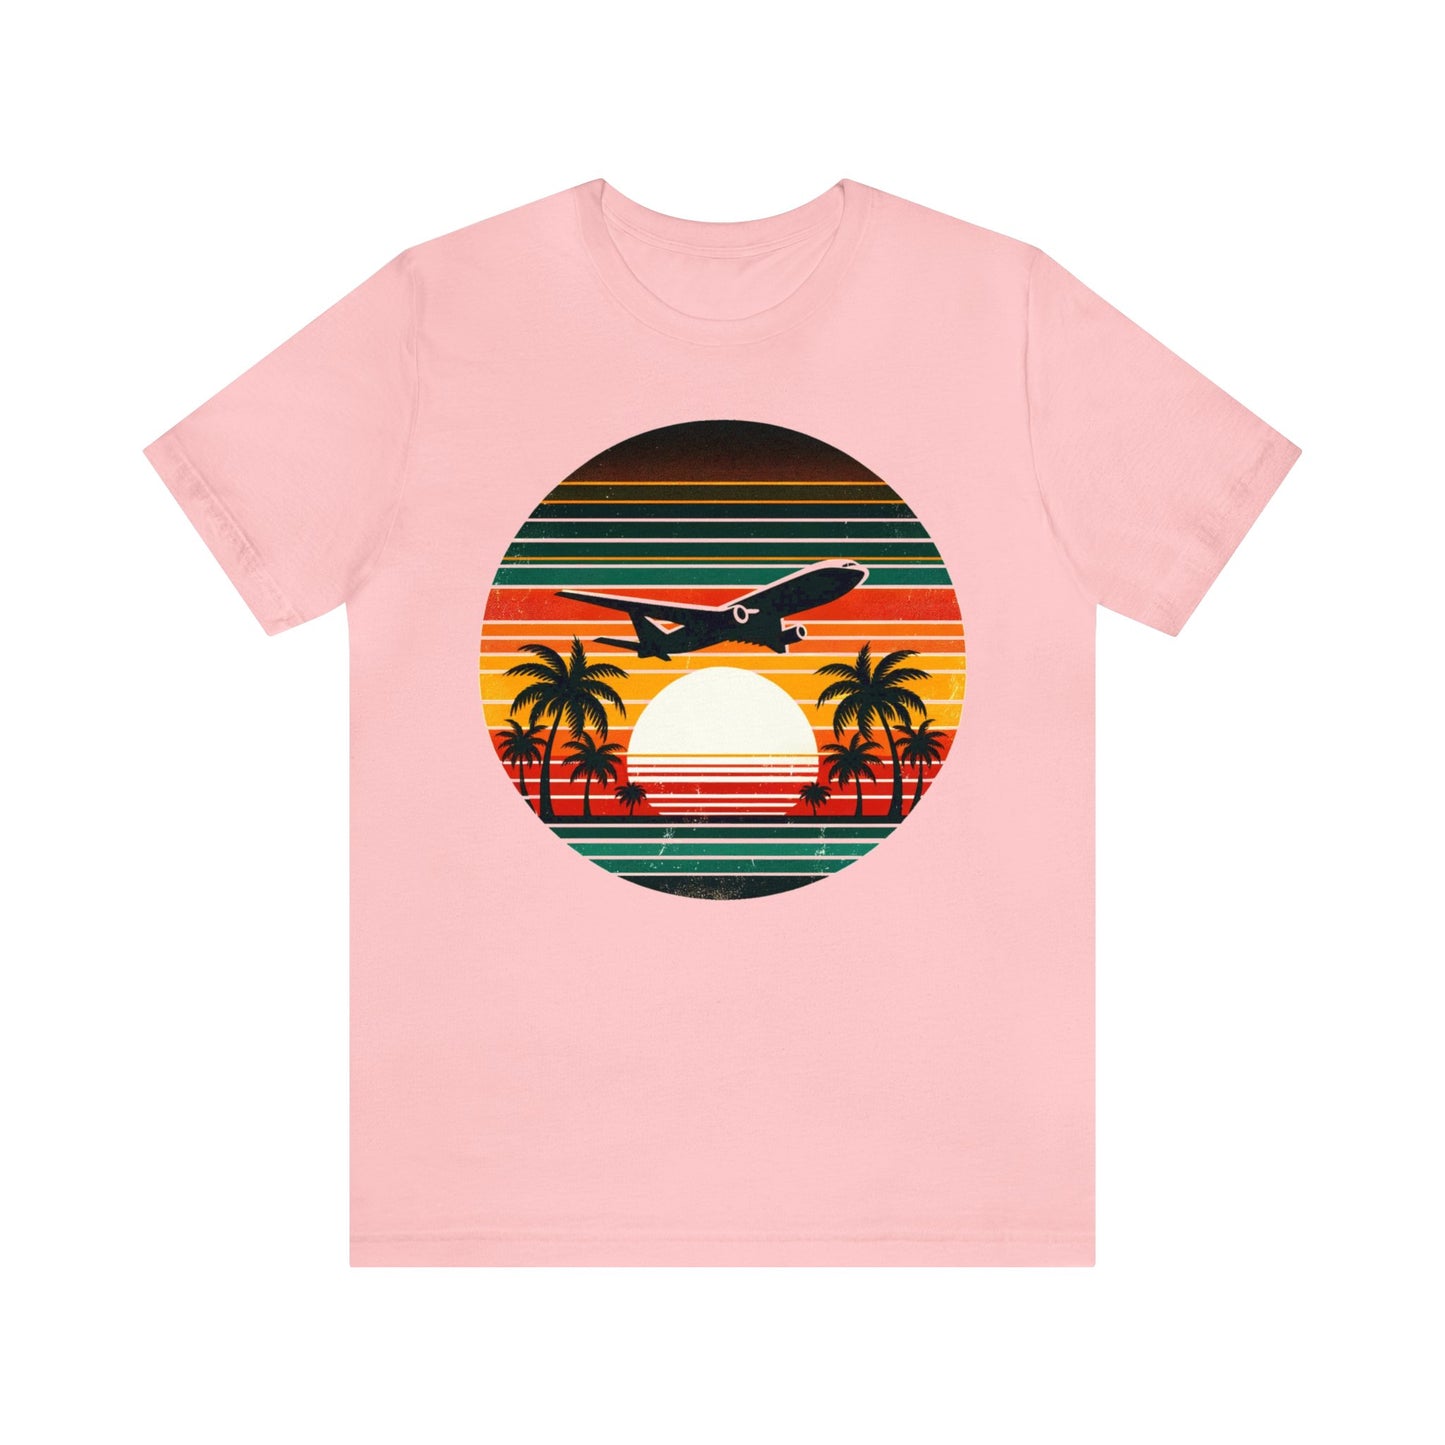 Airplane Tshirt, Vacation Flying 70s Vintage Sunset Travel Trip Airport Designer Graphic Crewneck Men Women Tee Short Sleeve Shirt